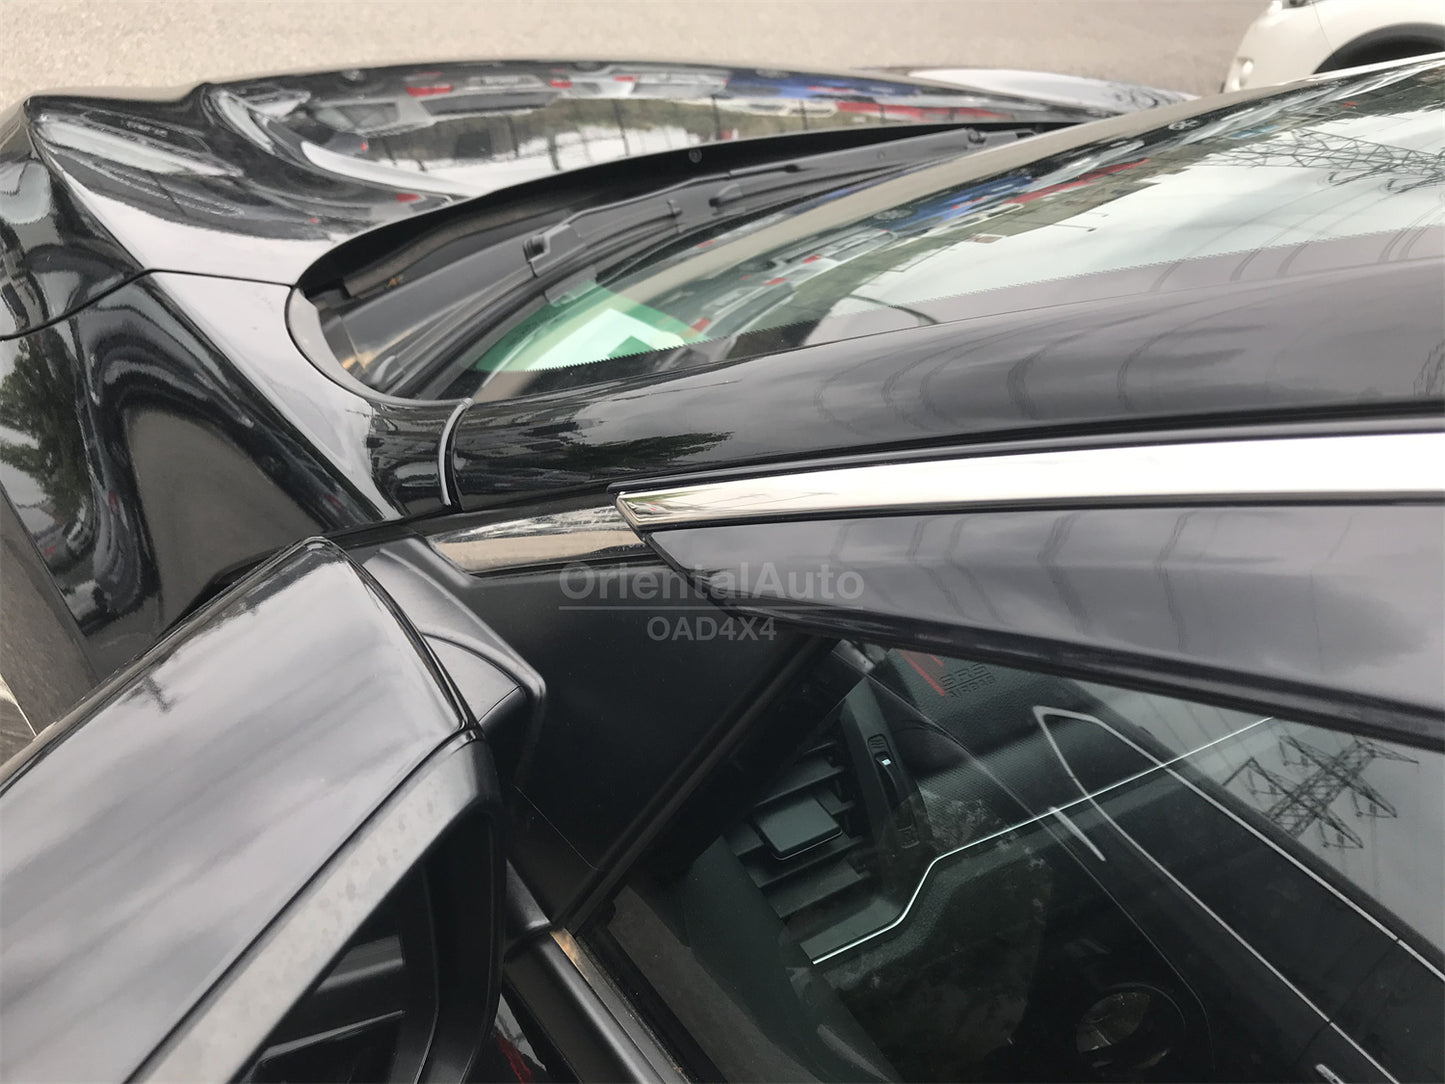 Injection Stainless Weathershields For Honda Civic Sedan 10th Gen 2016-2021 Weather Shields Window Visor